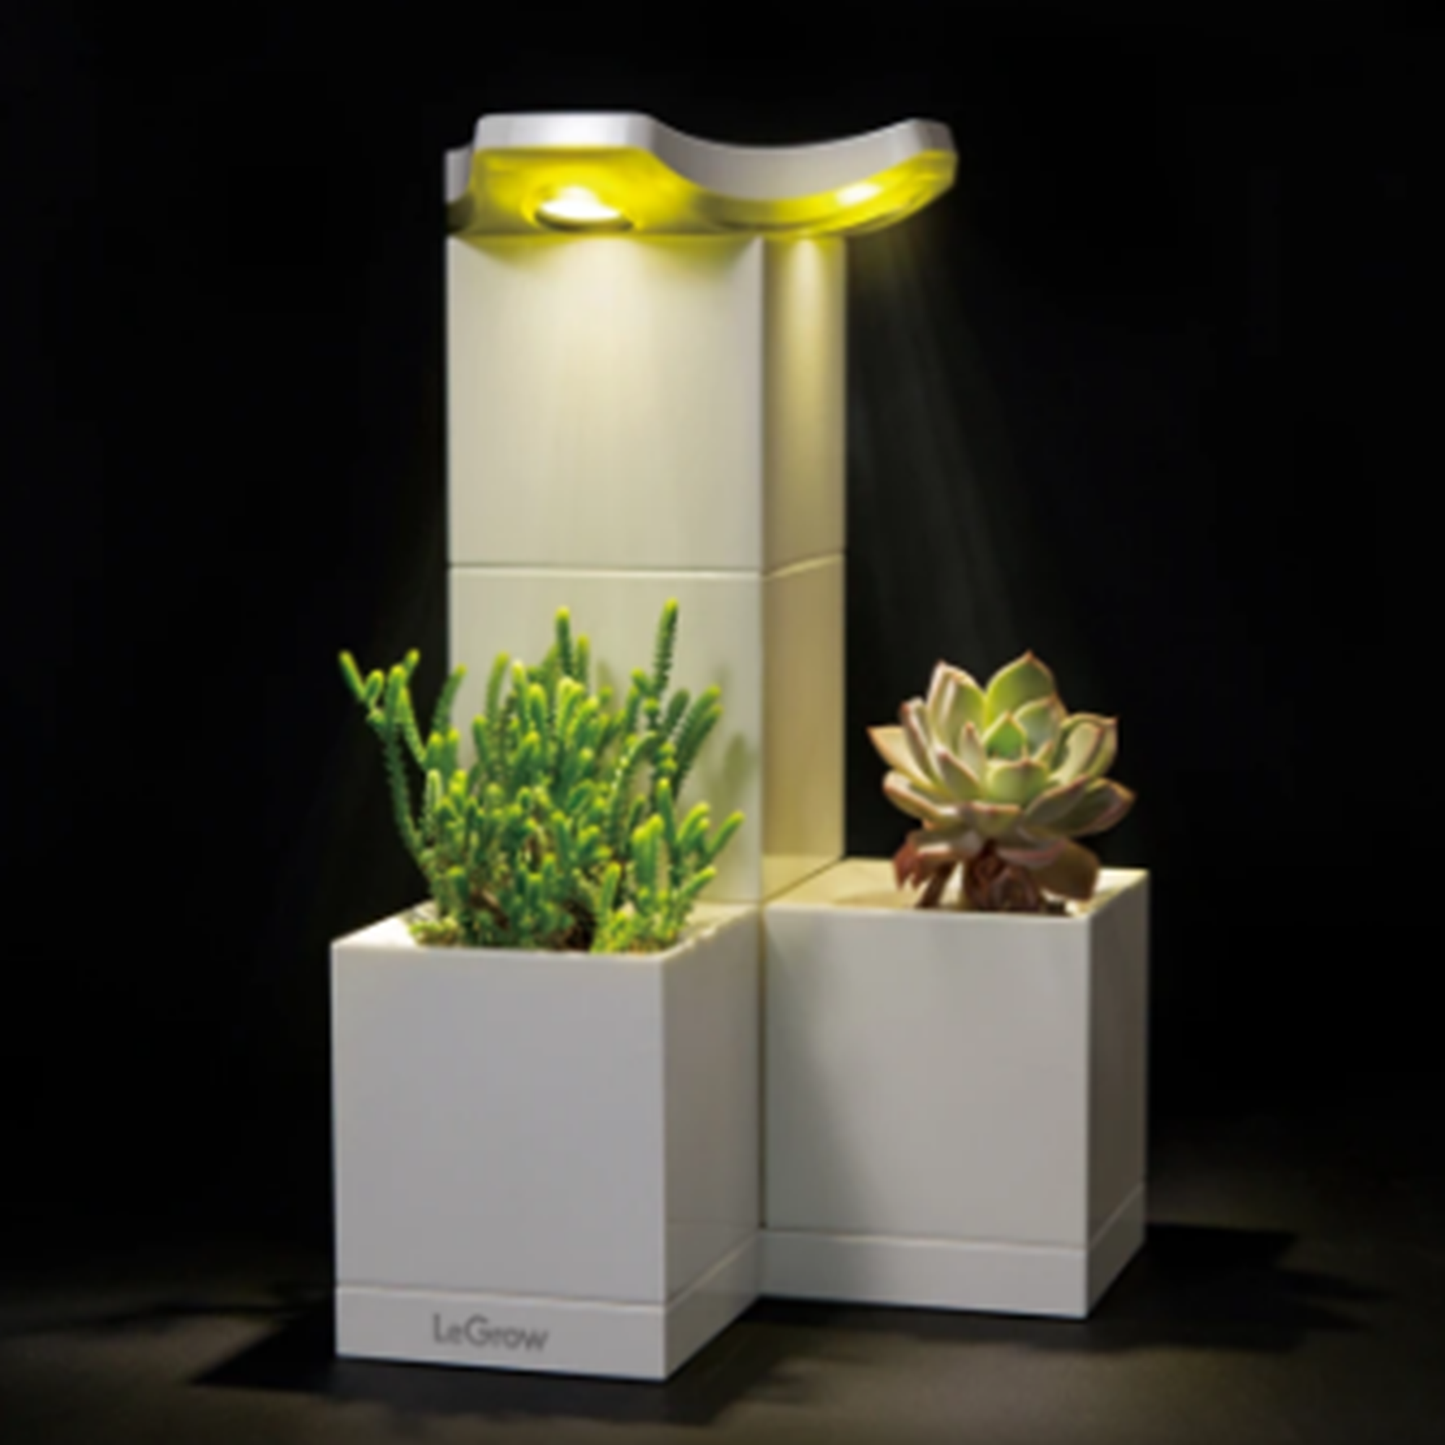 LeGrow TG-06 Modular Indoor Smart Garden Light